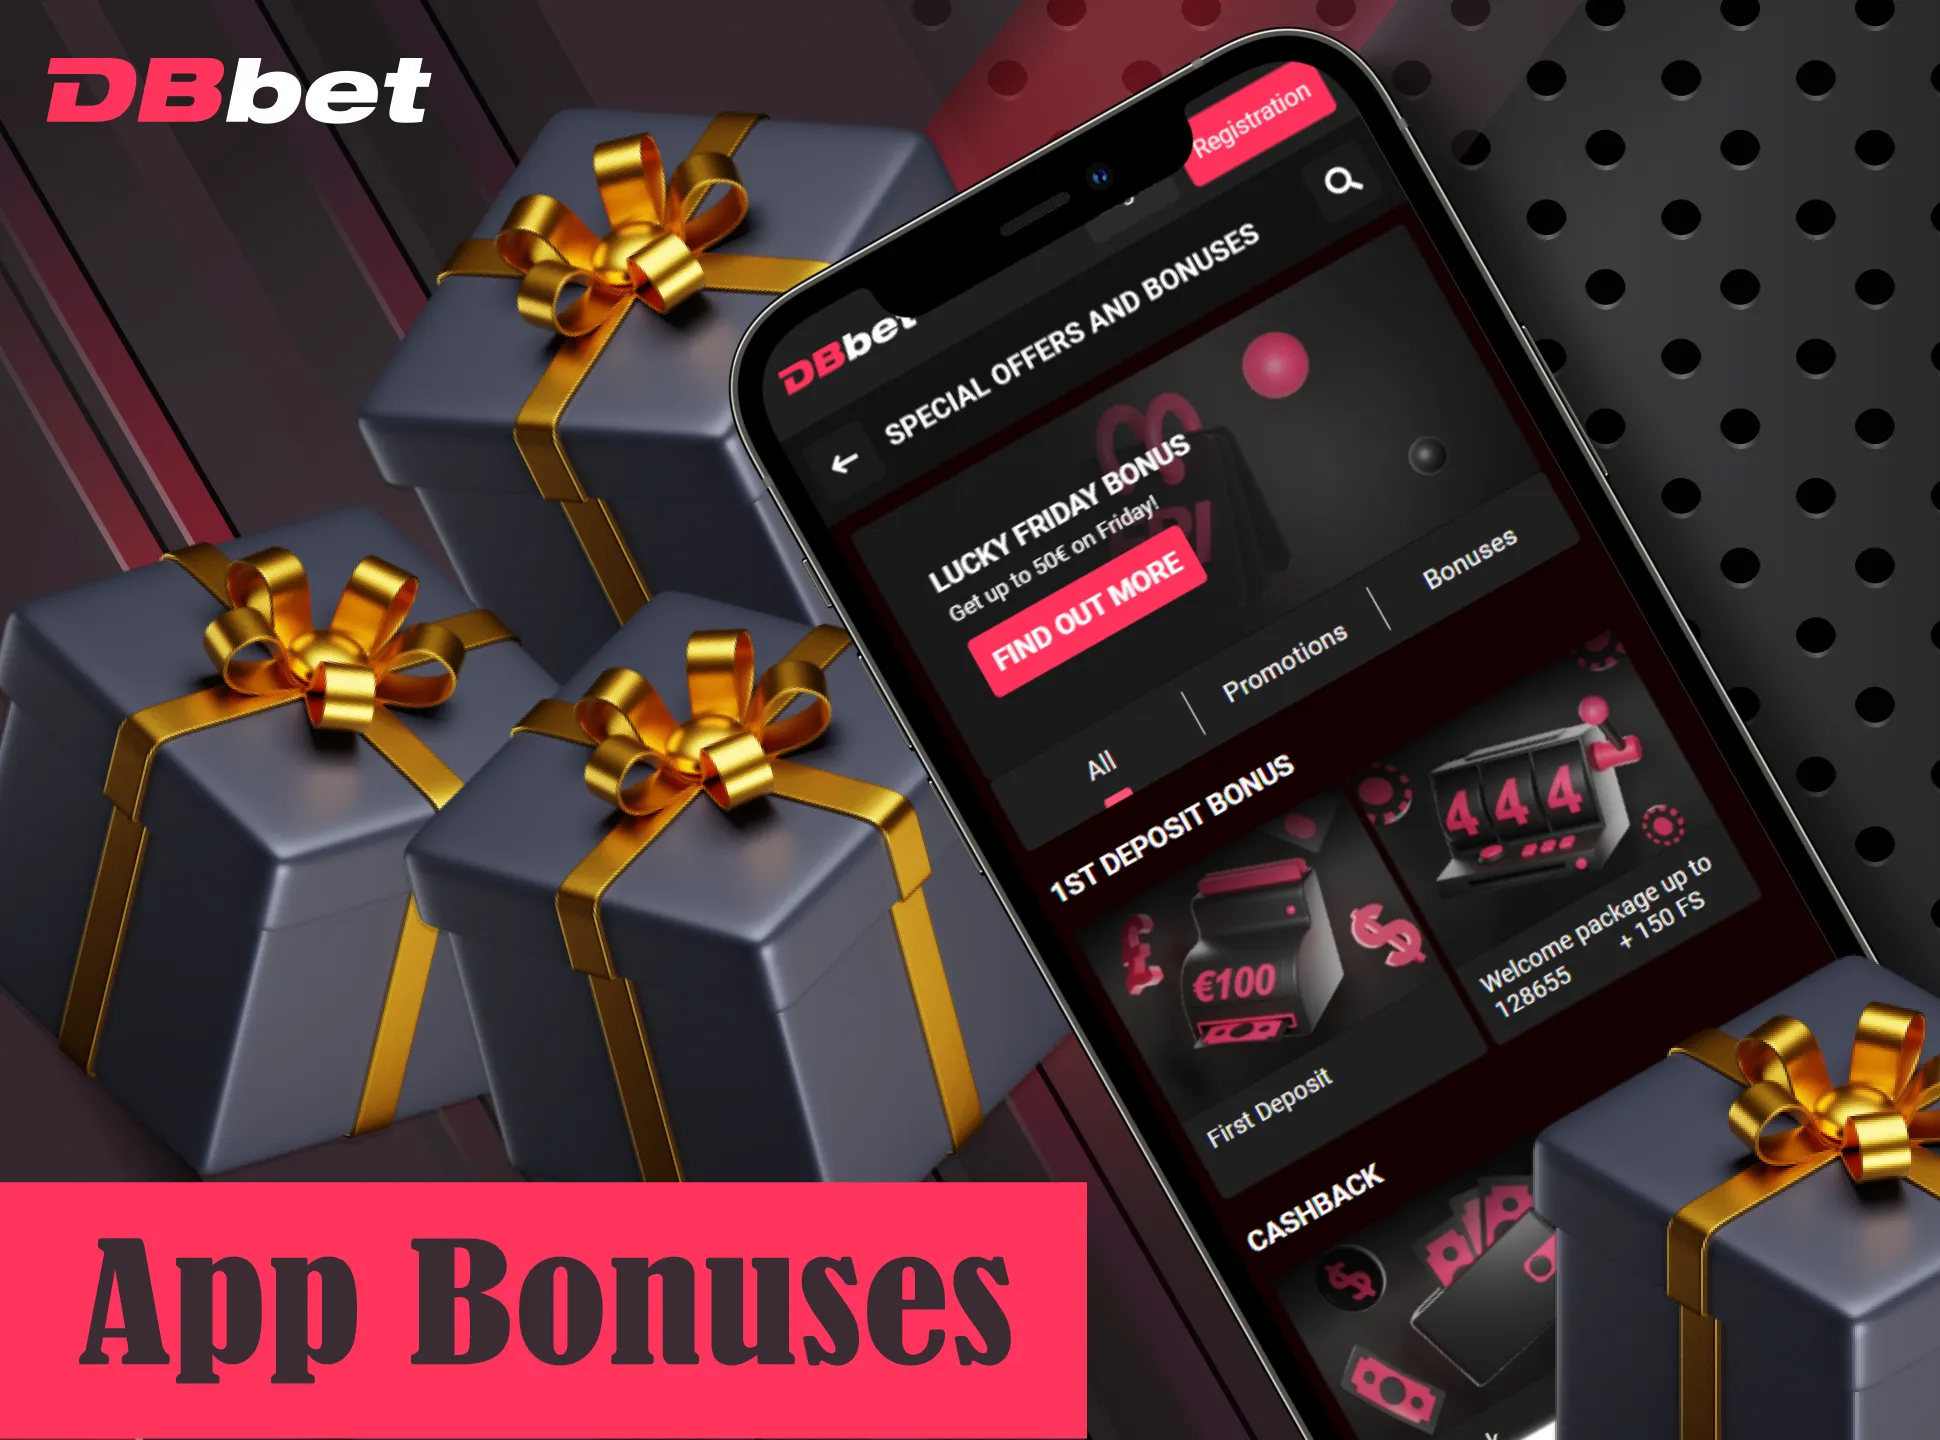 Get bonuses by using DBbet app.